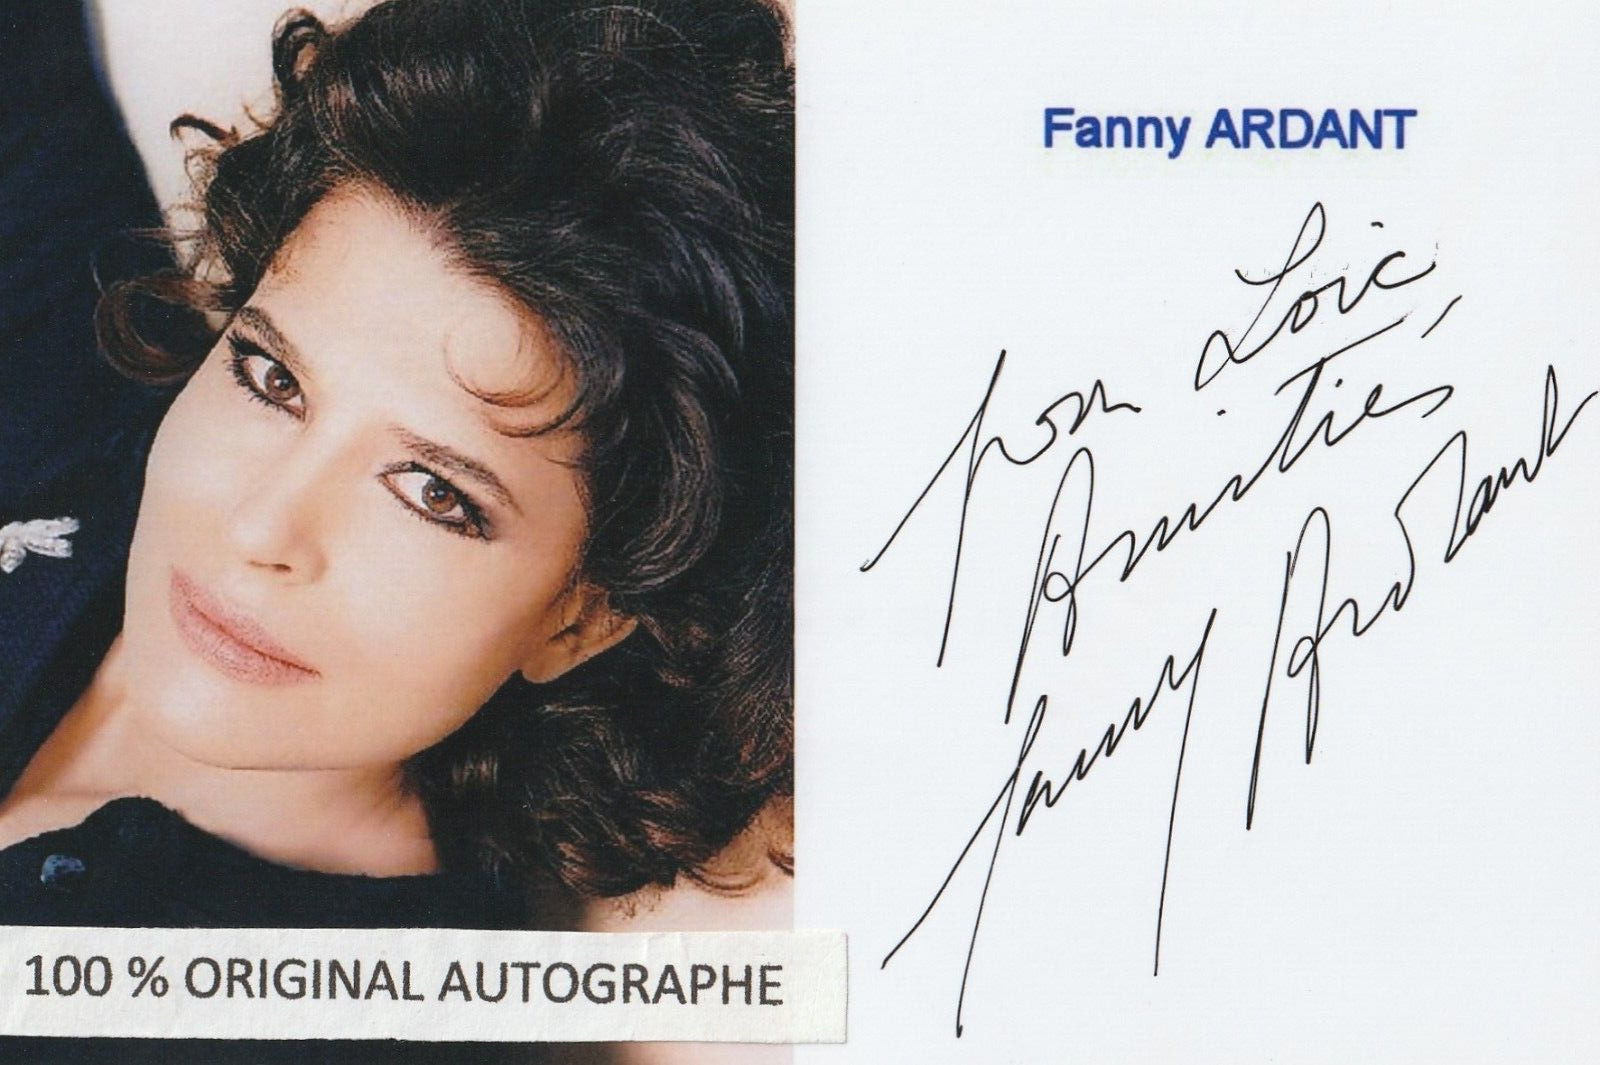 FANNY ARDANT: Signed Etoile World / Autograph Original Authentic / Photo.